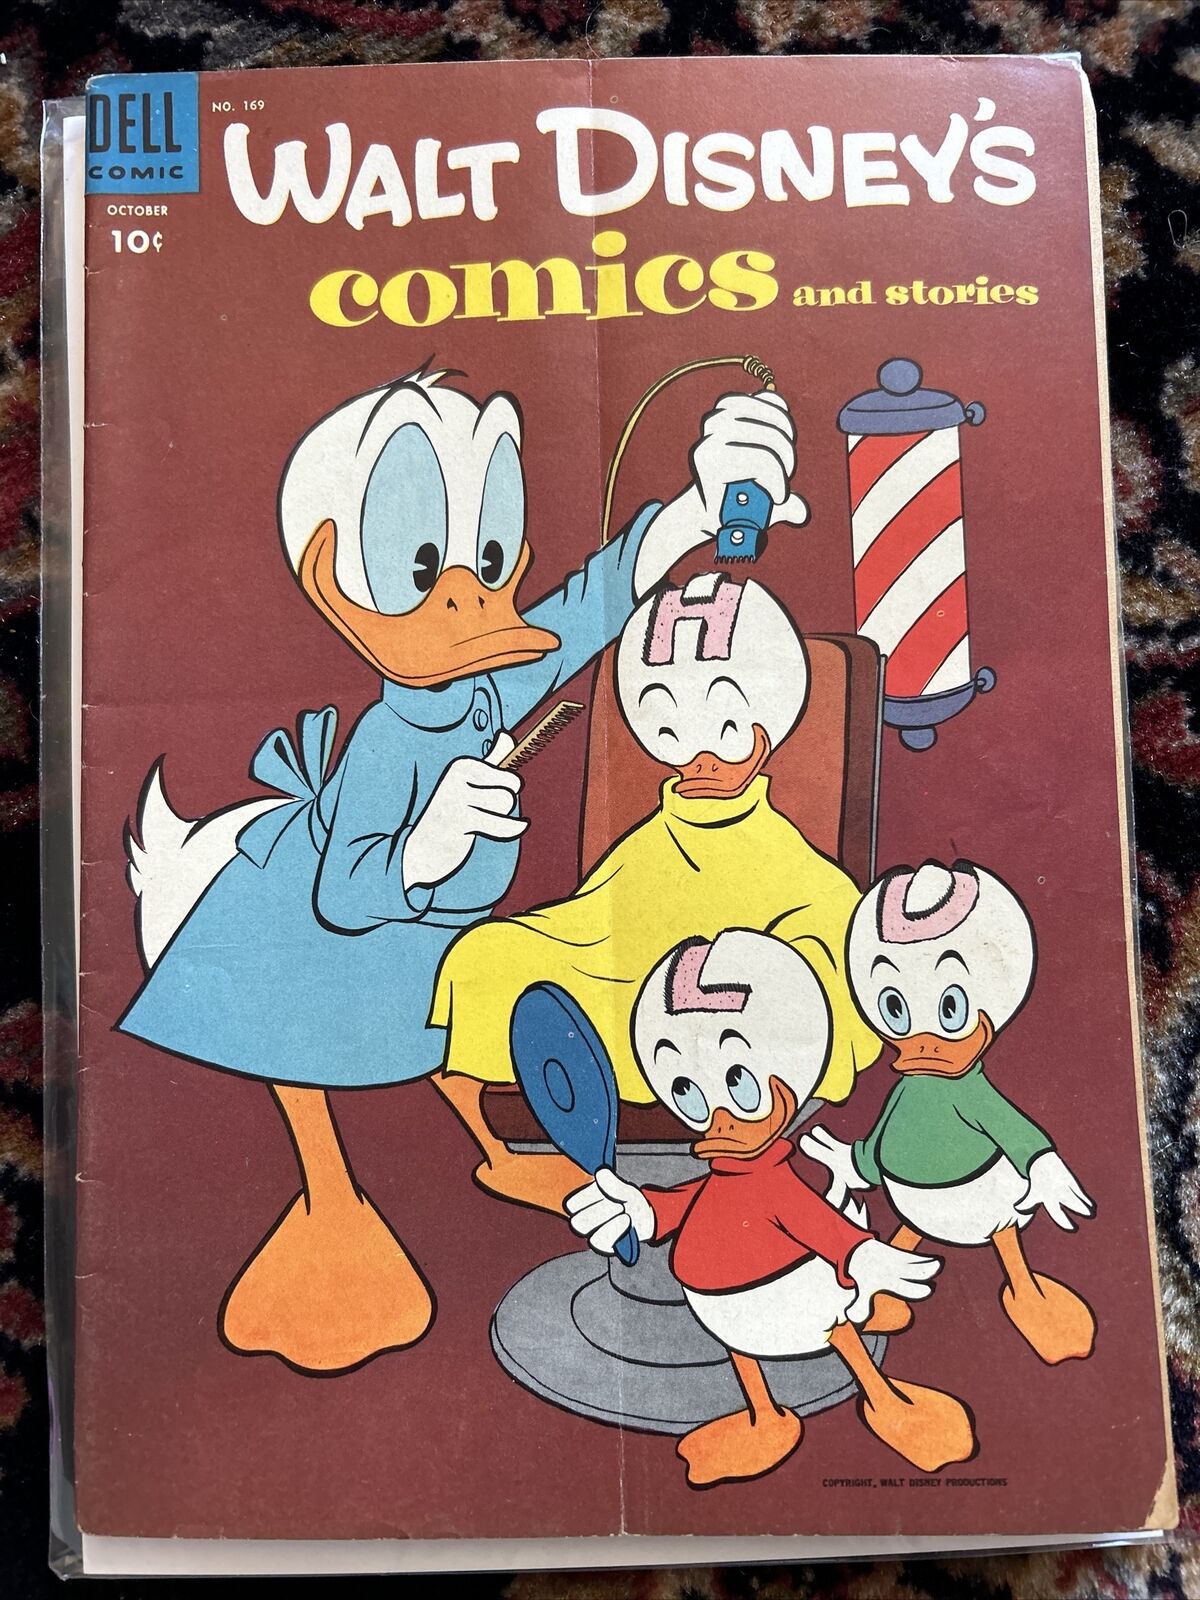 Walt Disney's Comics & Stories #169 (DELL, 1954) VG+/FN Carl Barks cover and art